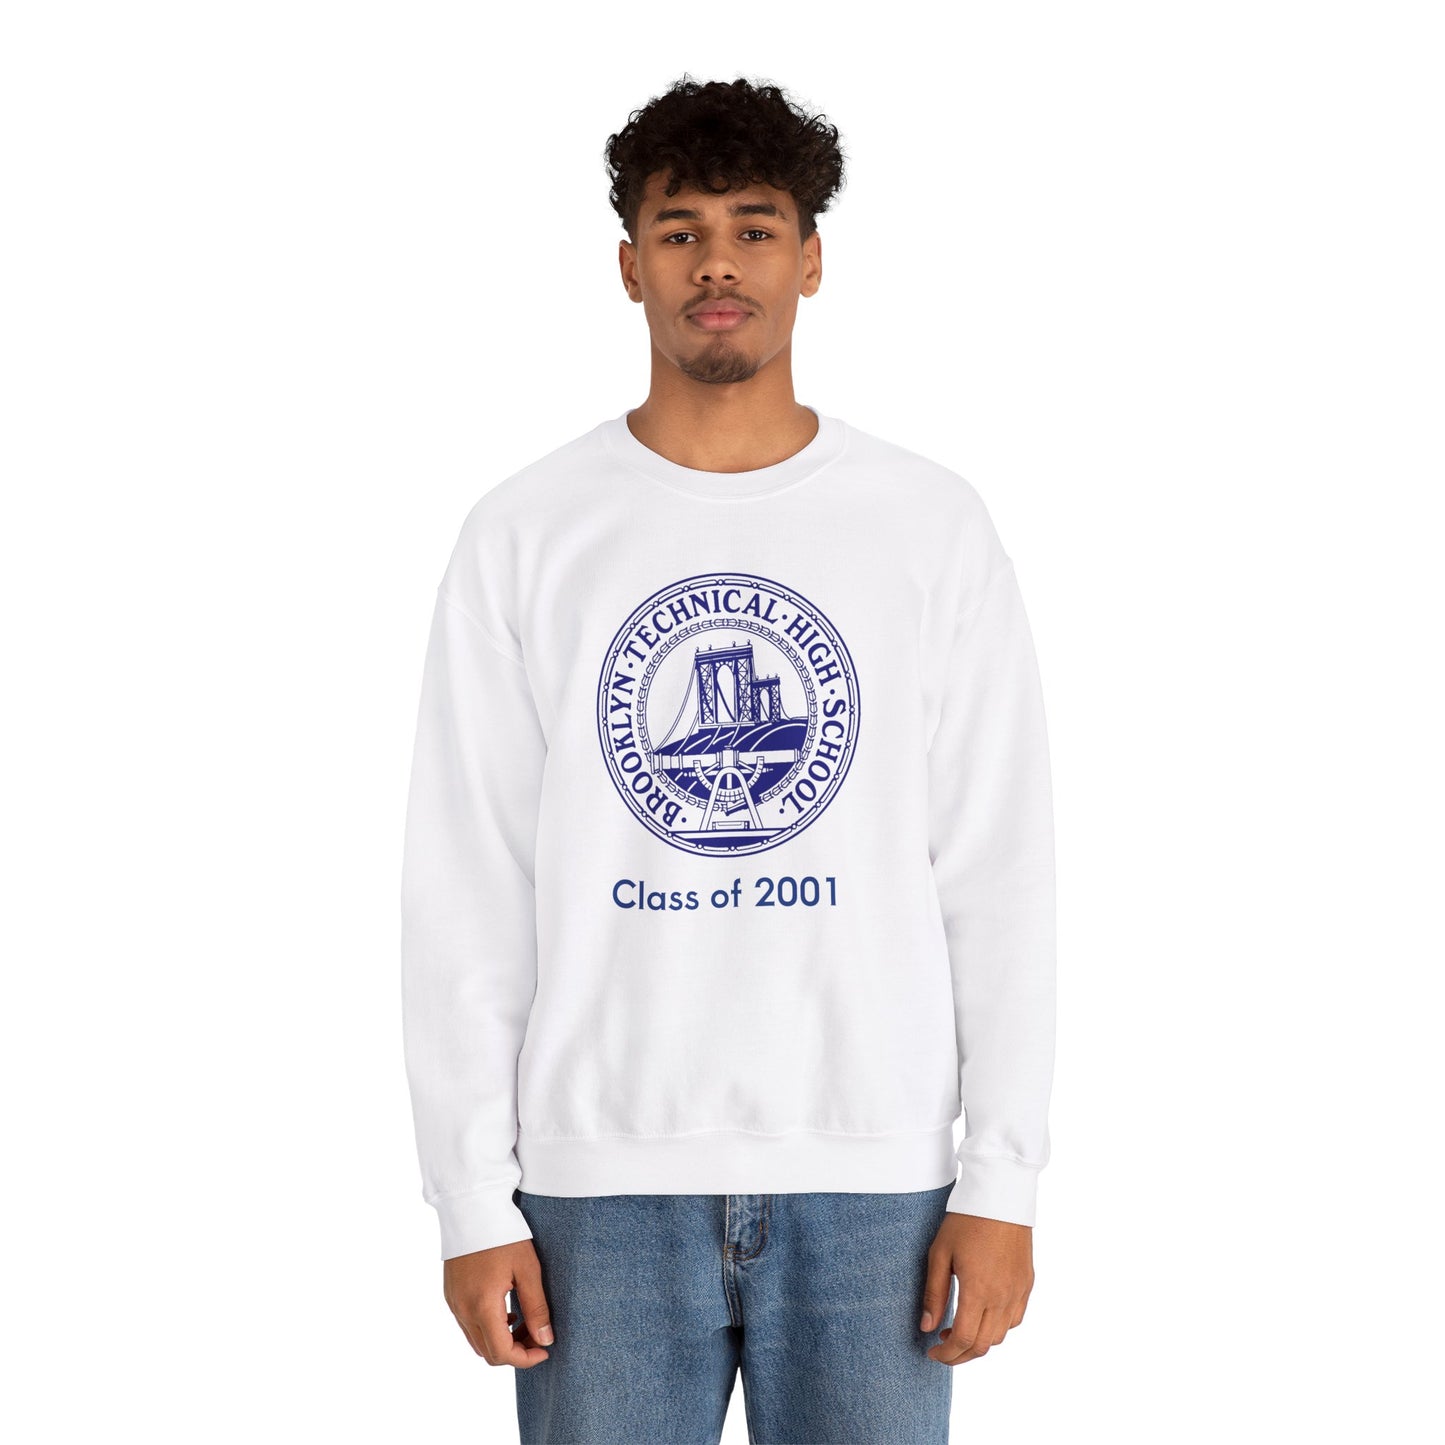 Classic Tech Seal - Men's Heavy Blend Crewneck Sweatshirt - Class Of 2001